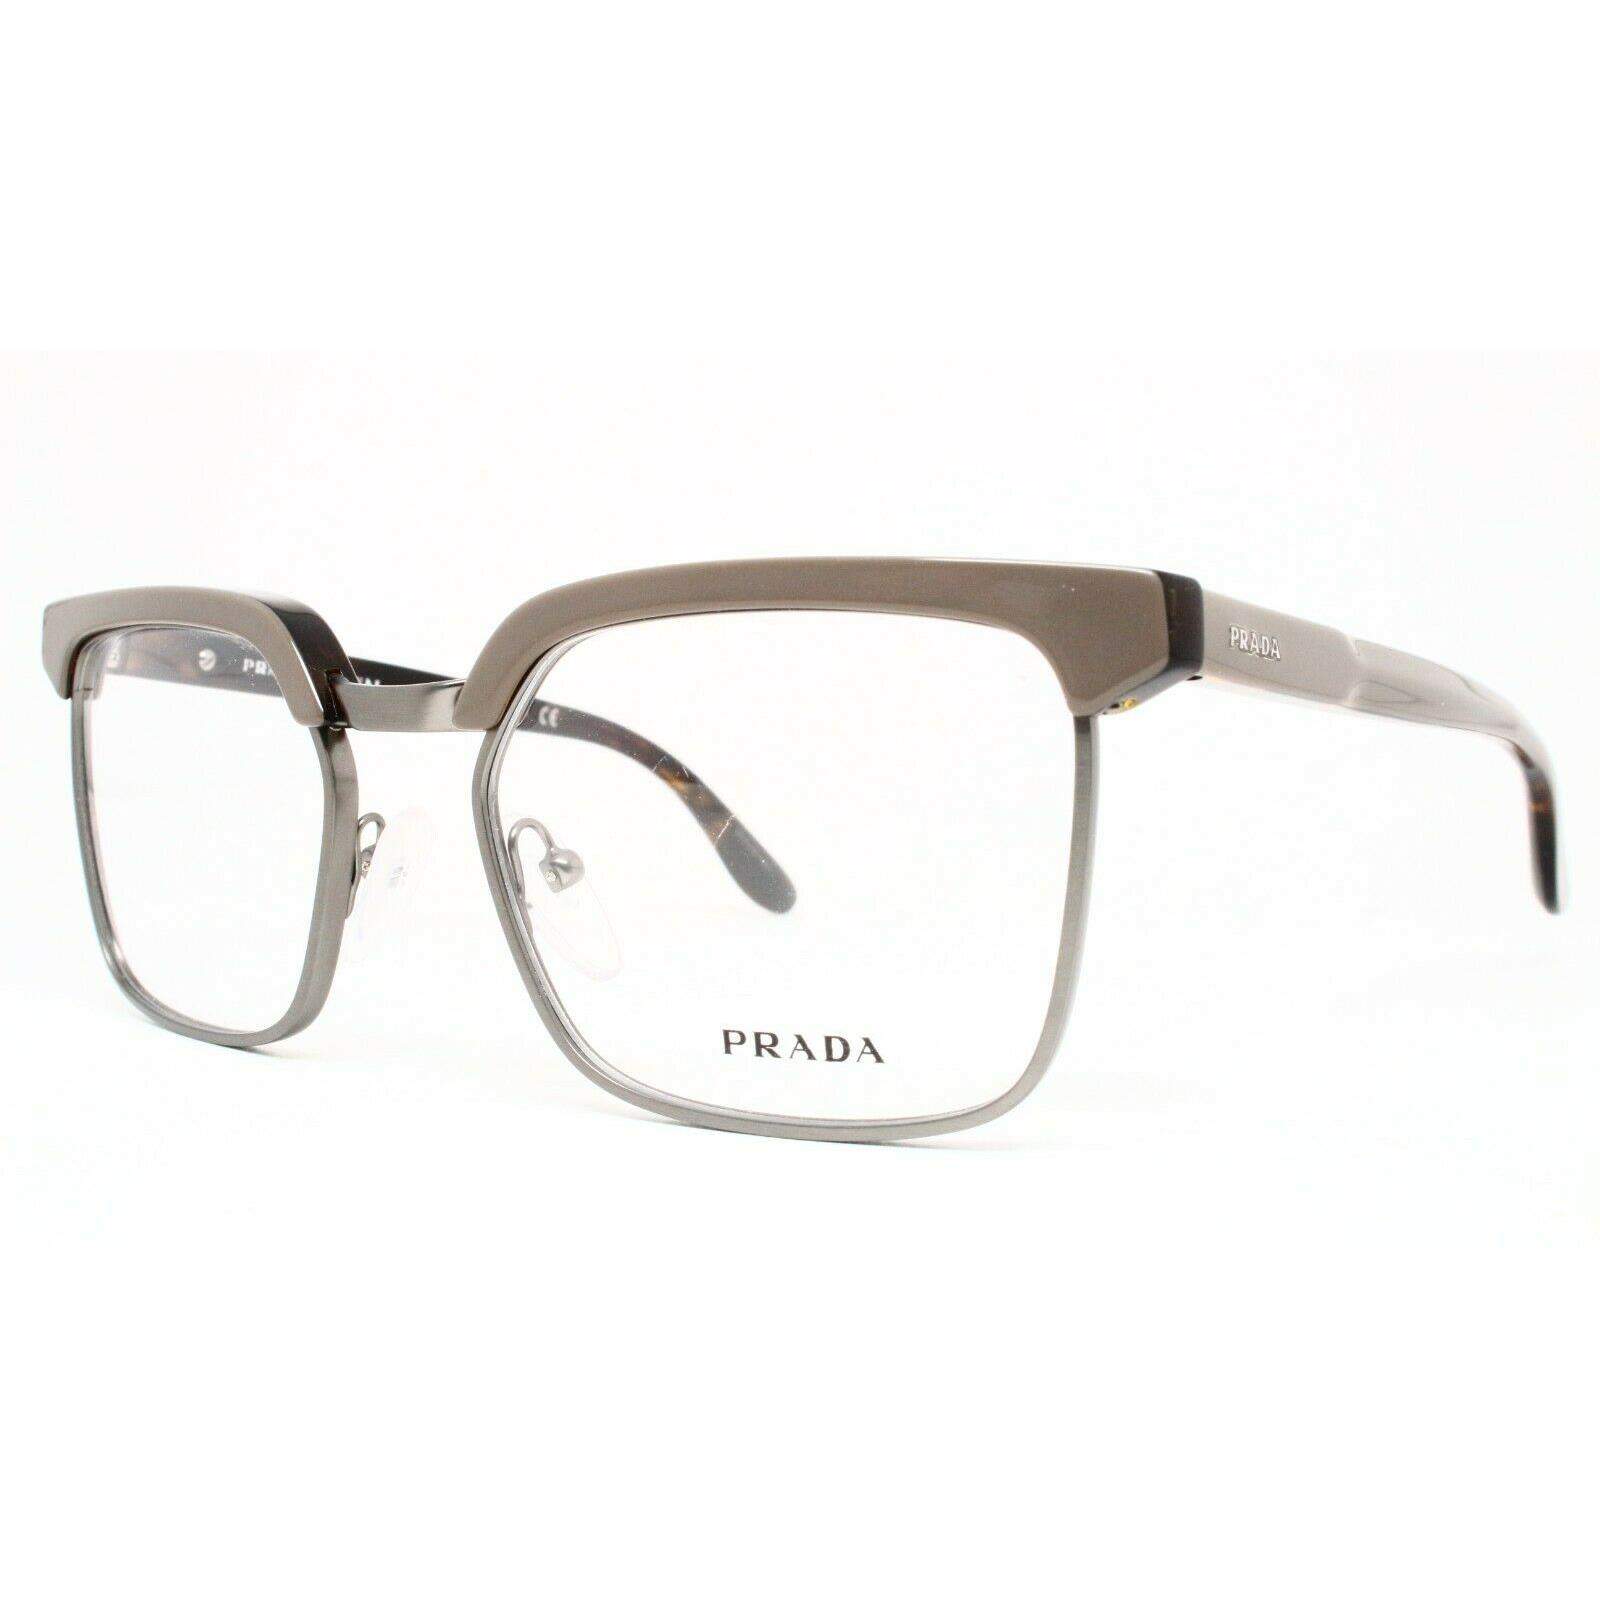 Prada Journal Vpr 15S 52-18-140 TV9-1O1 Grey Eyeglasses Frames P45 - Gray , Gray Frame